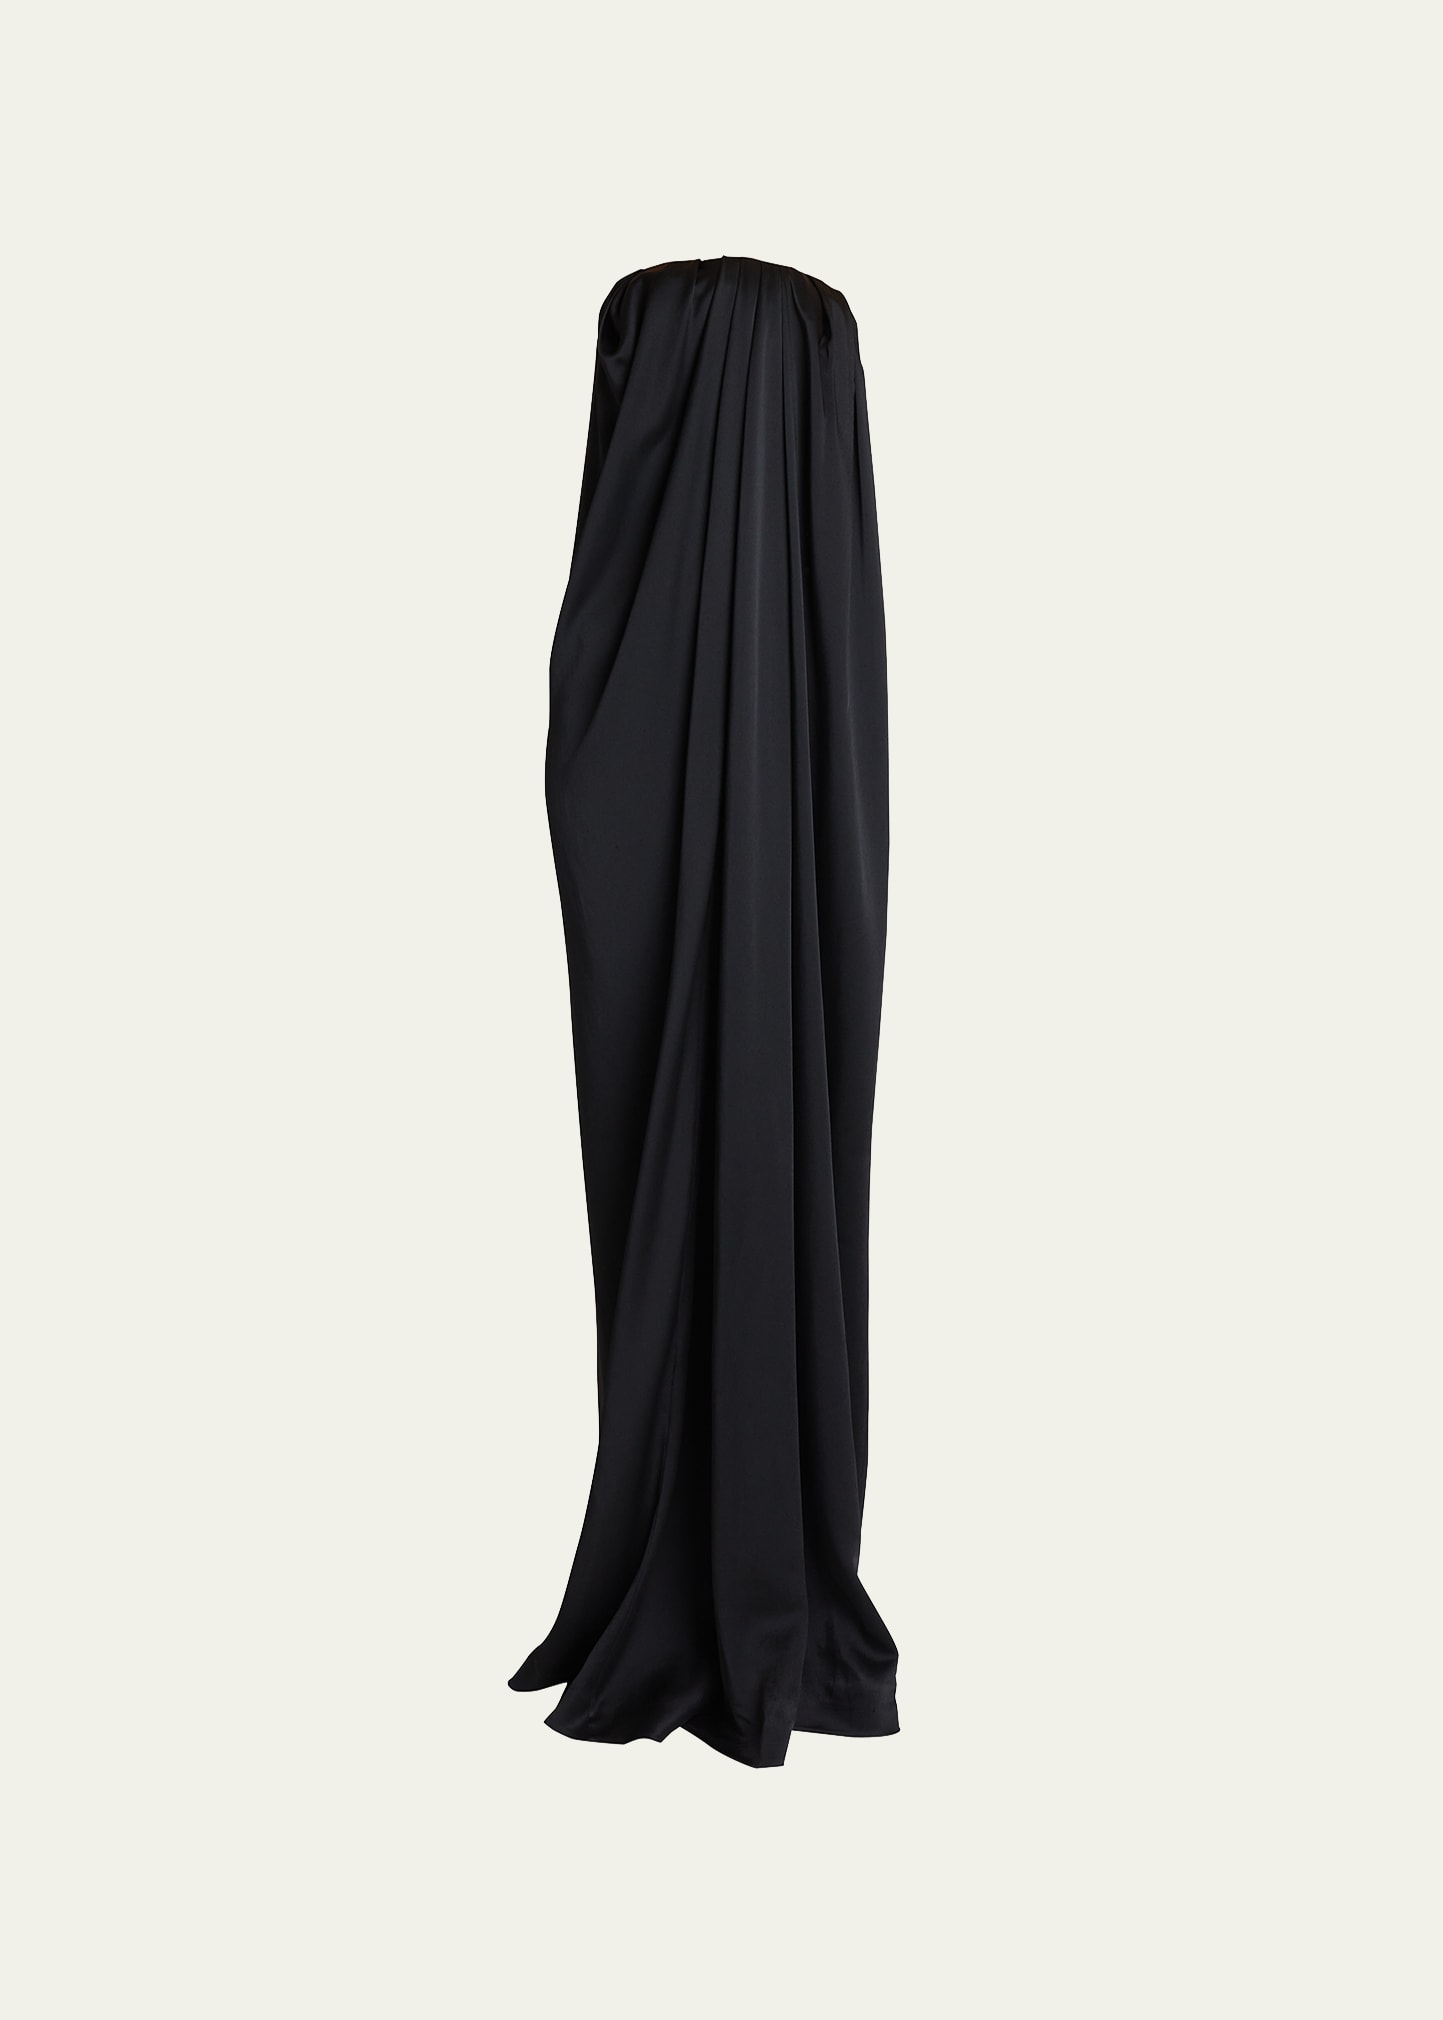 Saint Laurent Goddess Draped Satin Strapless Gown